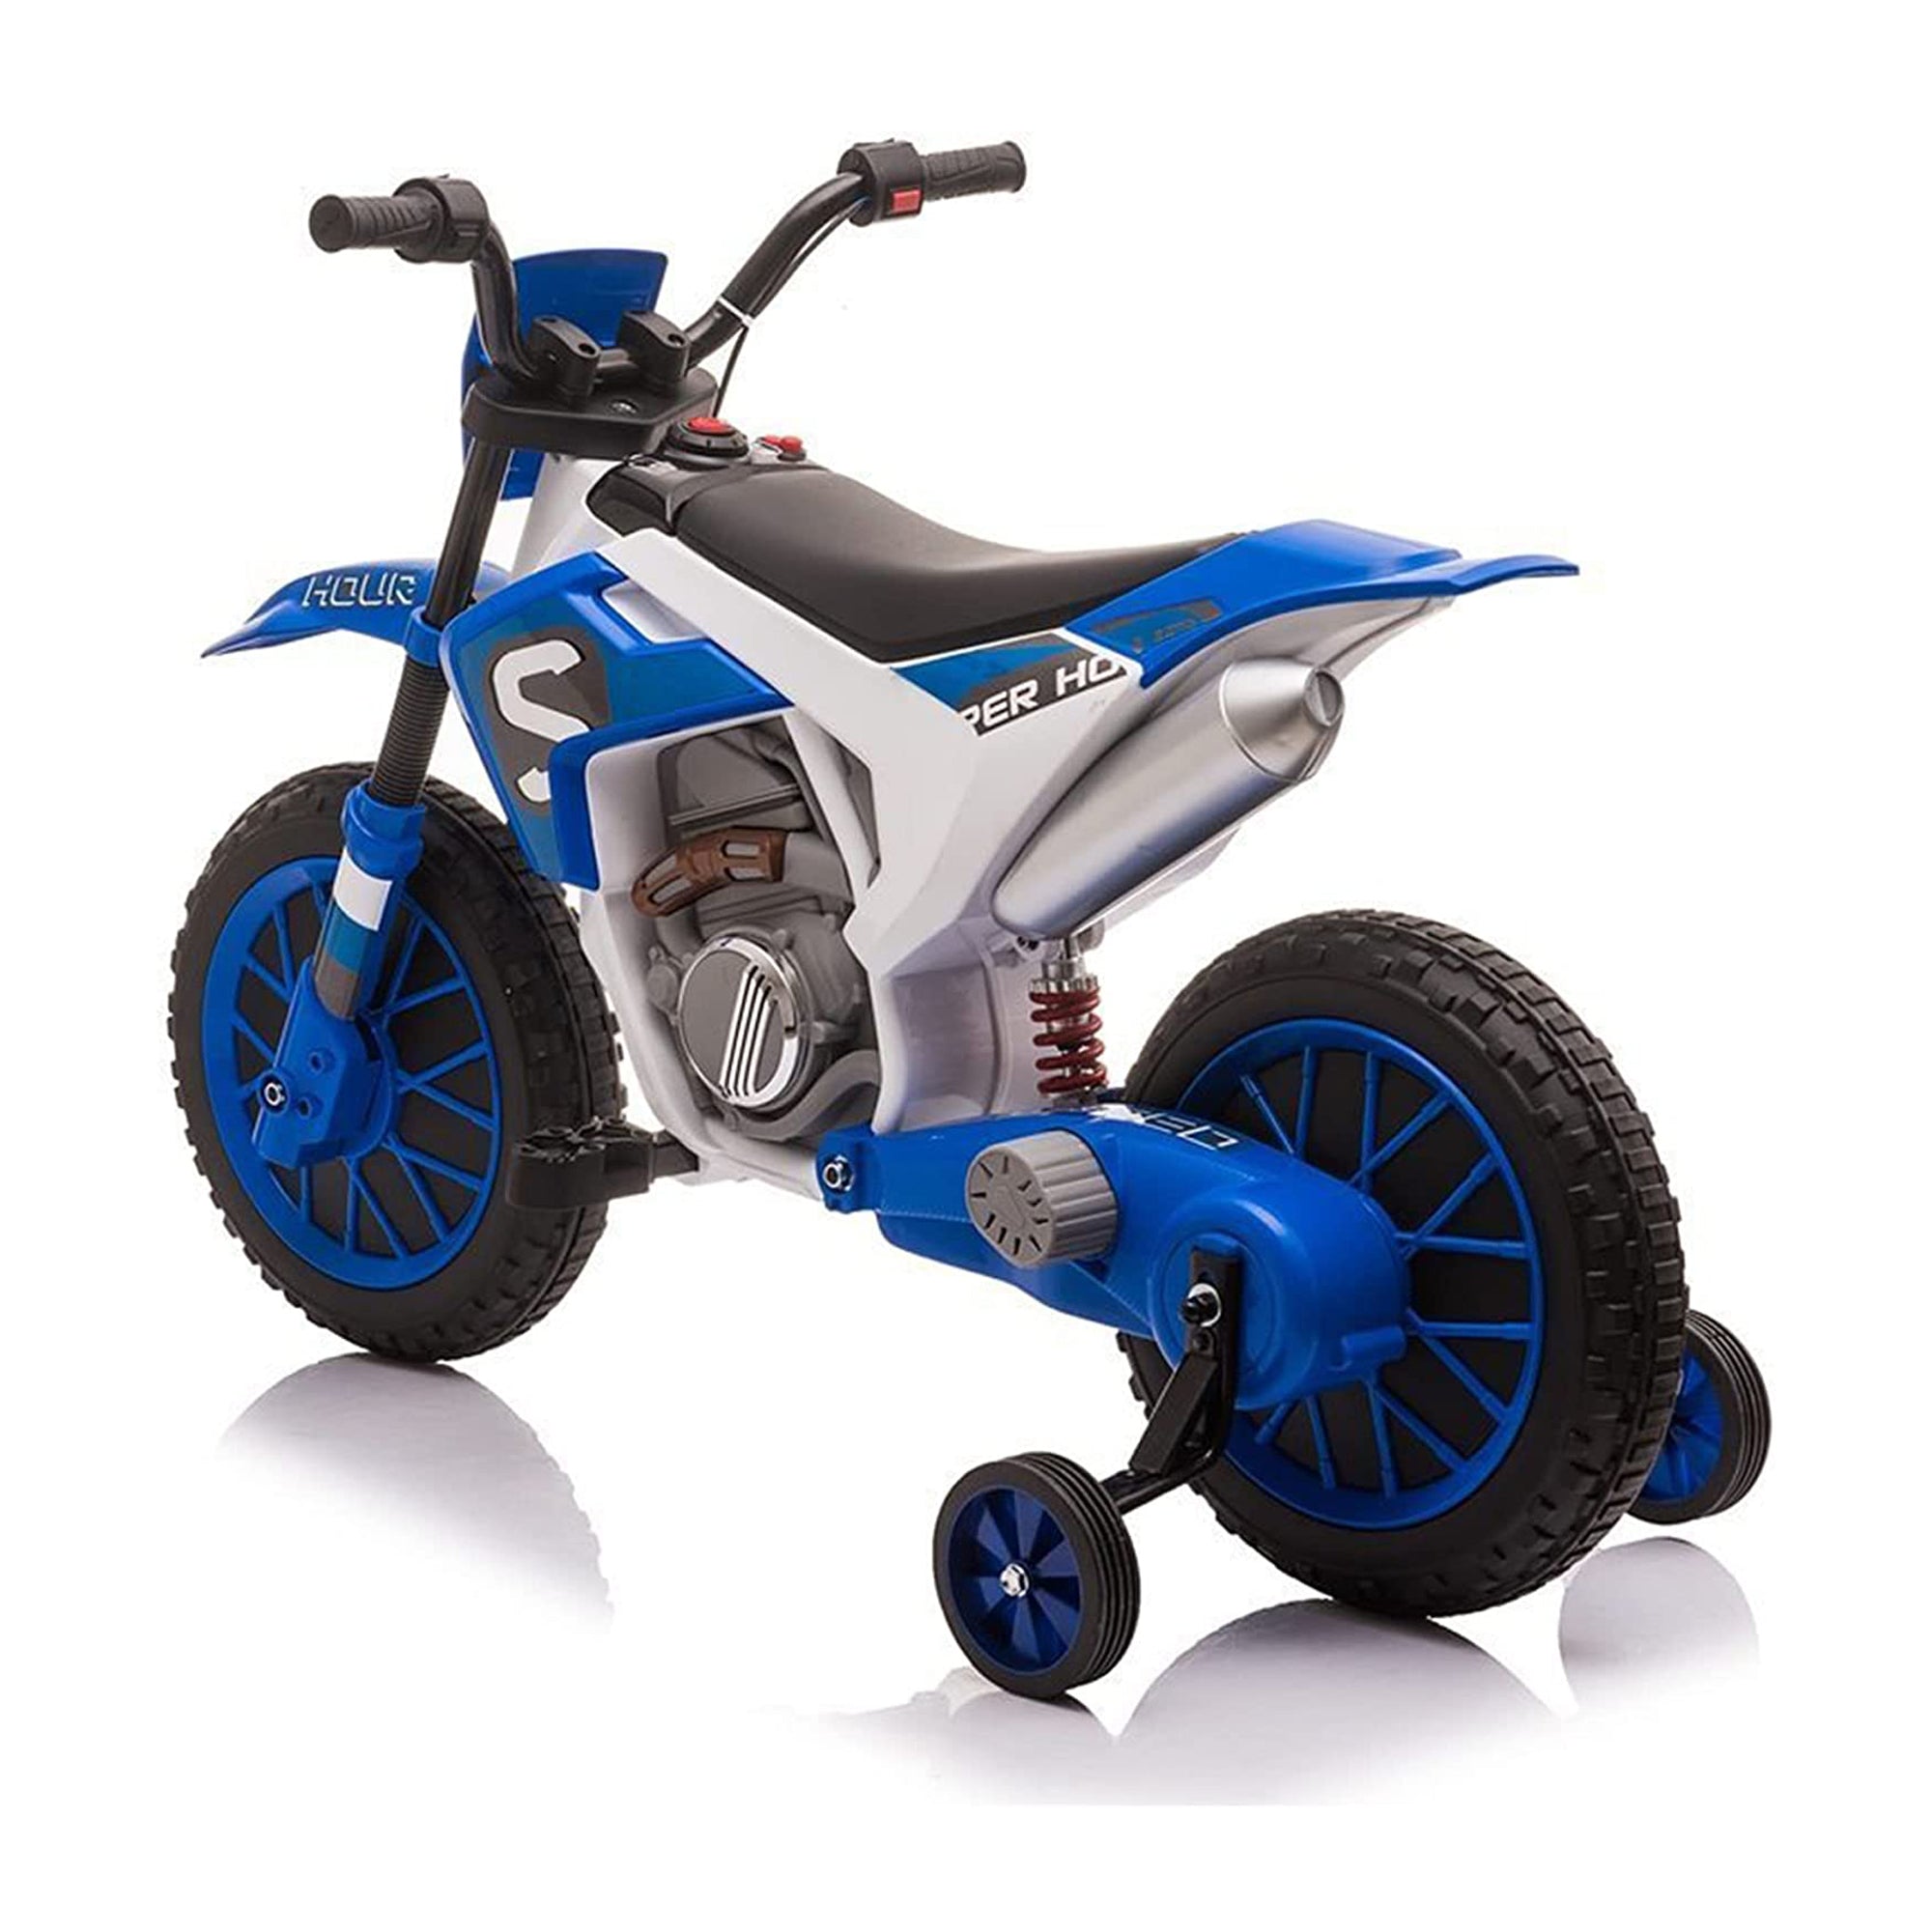 Ride on Kids Trail Motorbike XMX616 12V Blue - DerakBikes